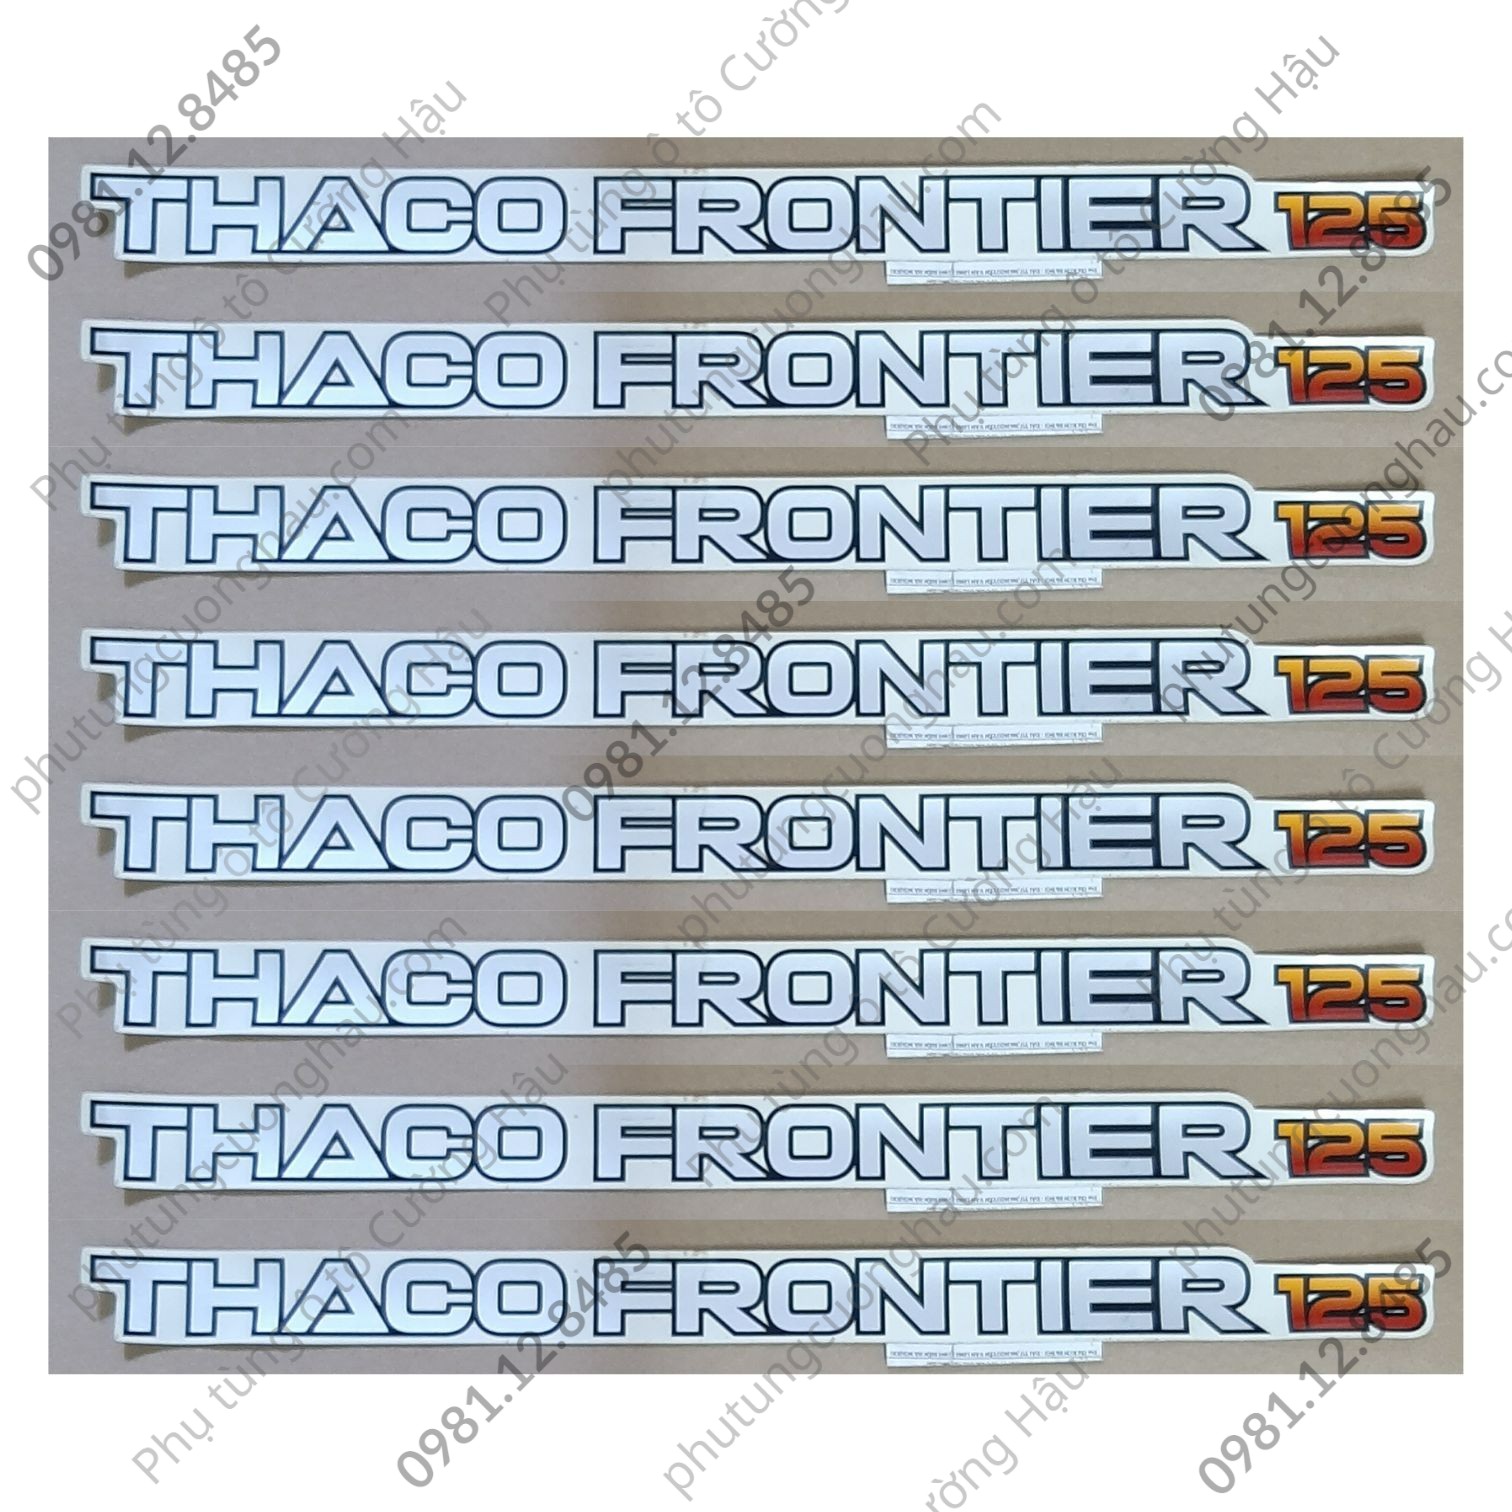 Ảnh Tem chữ Thaco Frontier 125, xe tải Thaco Frontier 125 tải 1T25